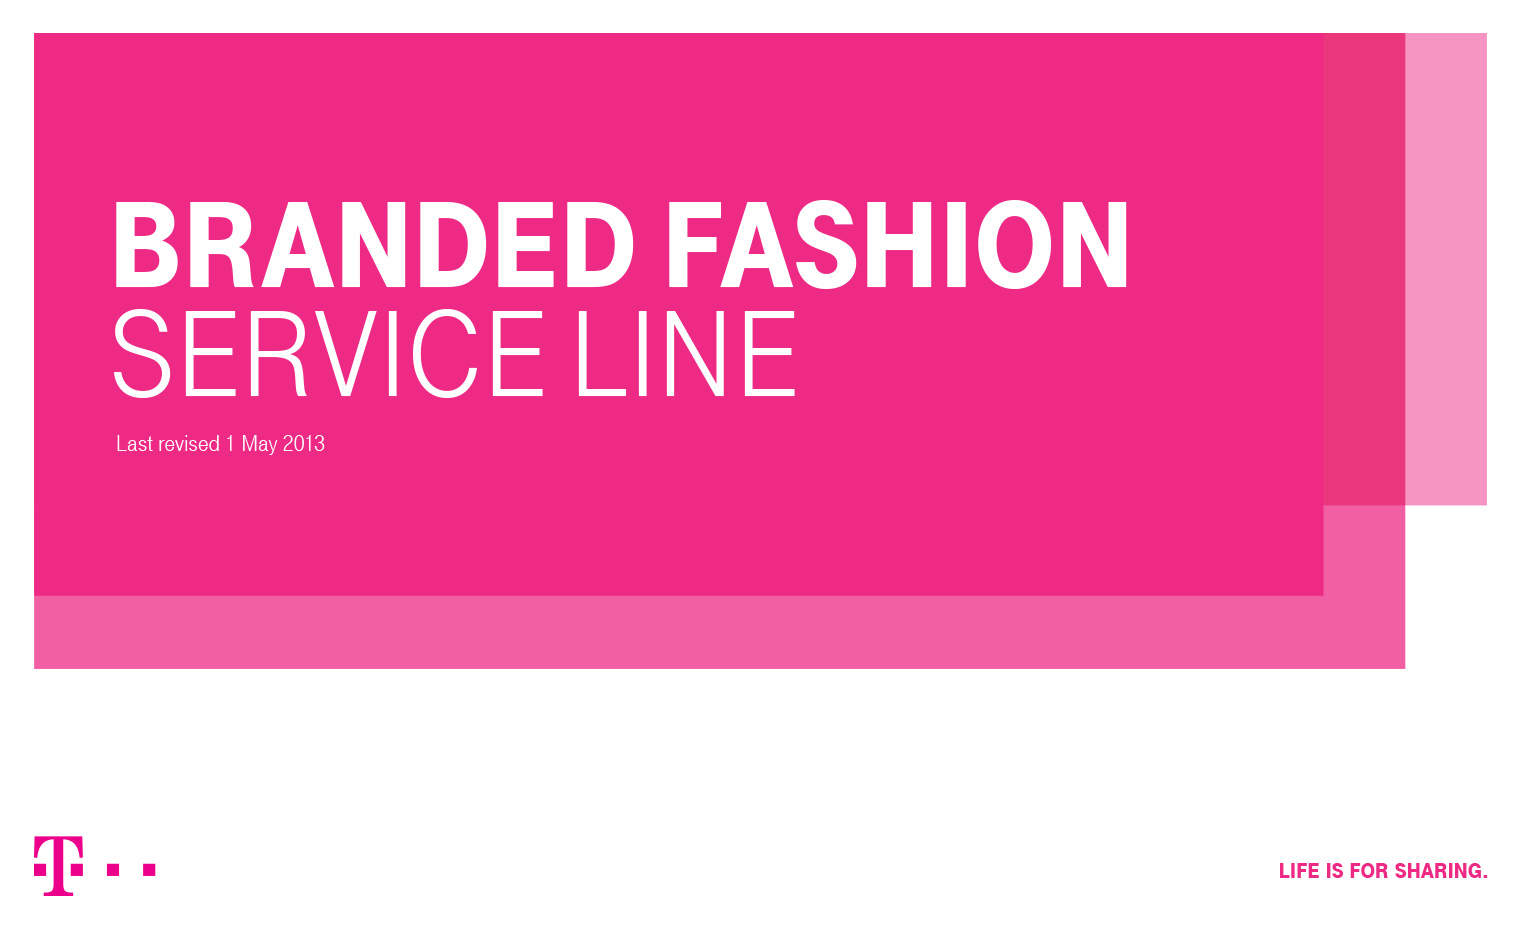 field-guideline-branded-fashion-service-line-style-guide-deutsche-telekom-tmobile